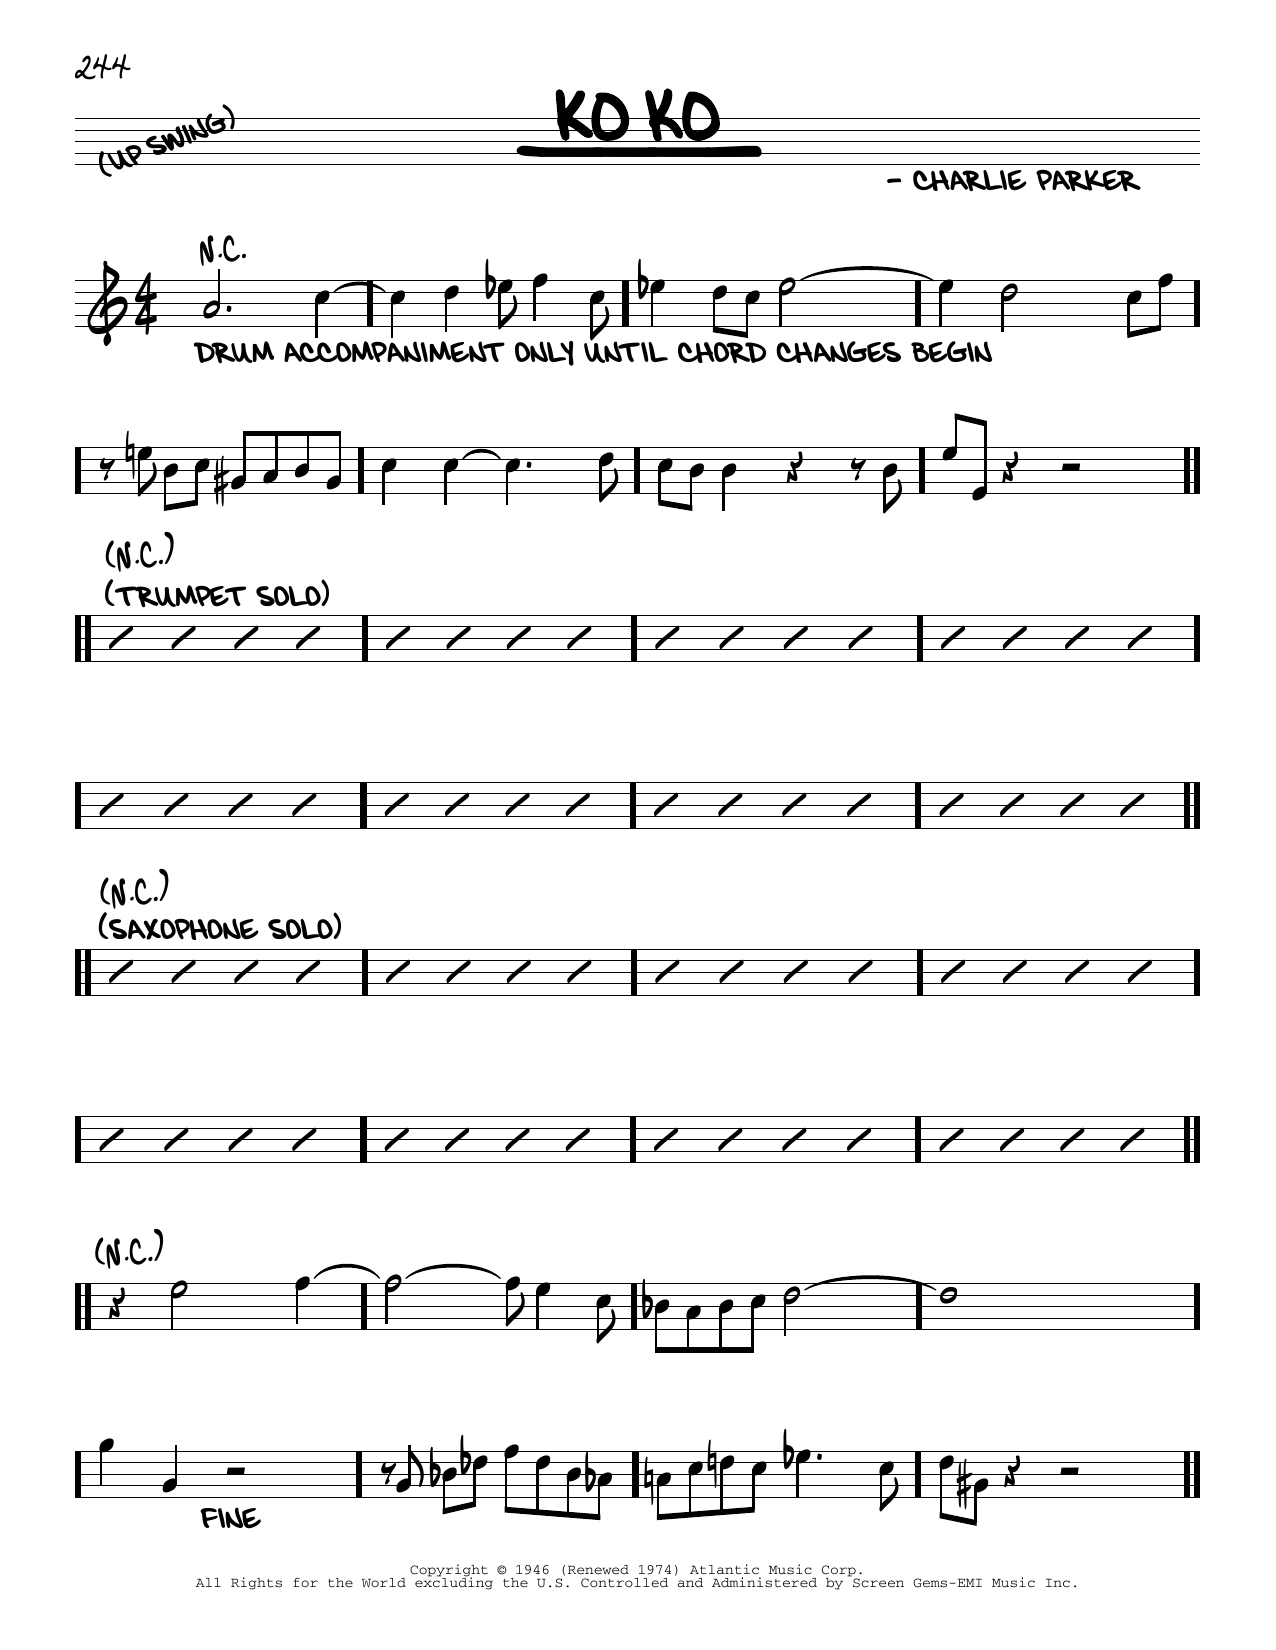 Charlie Parker Ko Ko Sheet Music Notes & Chords for Transcribed Score - Download or Print PDF